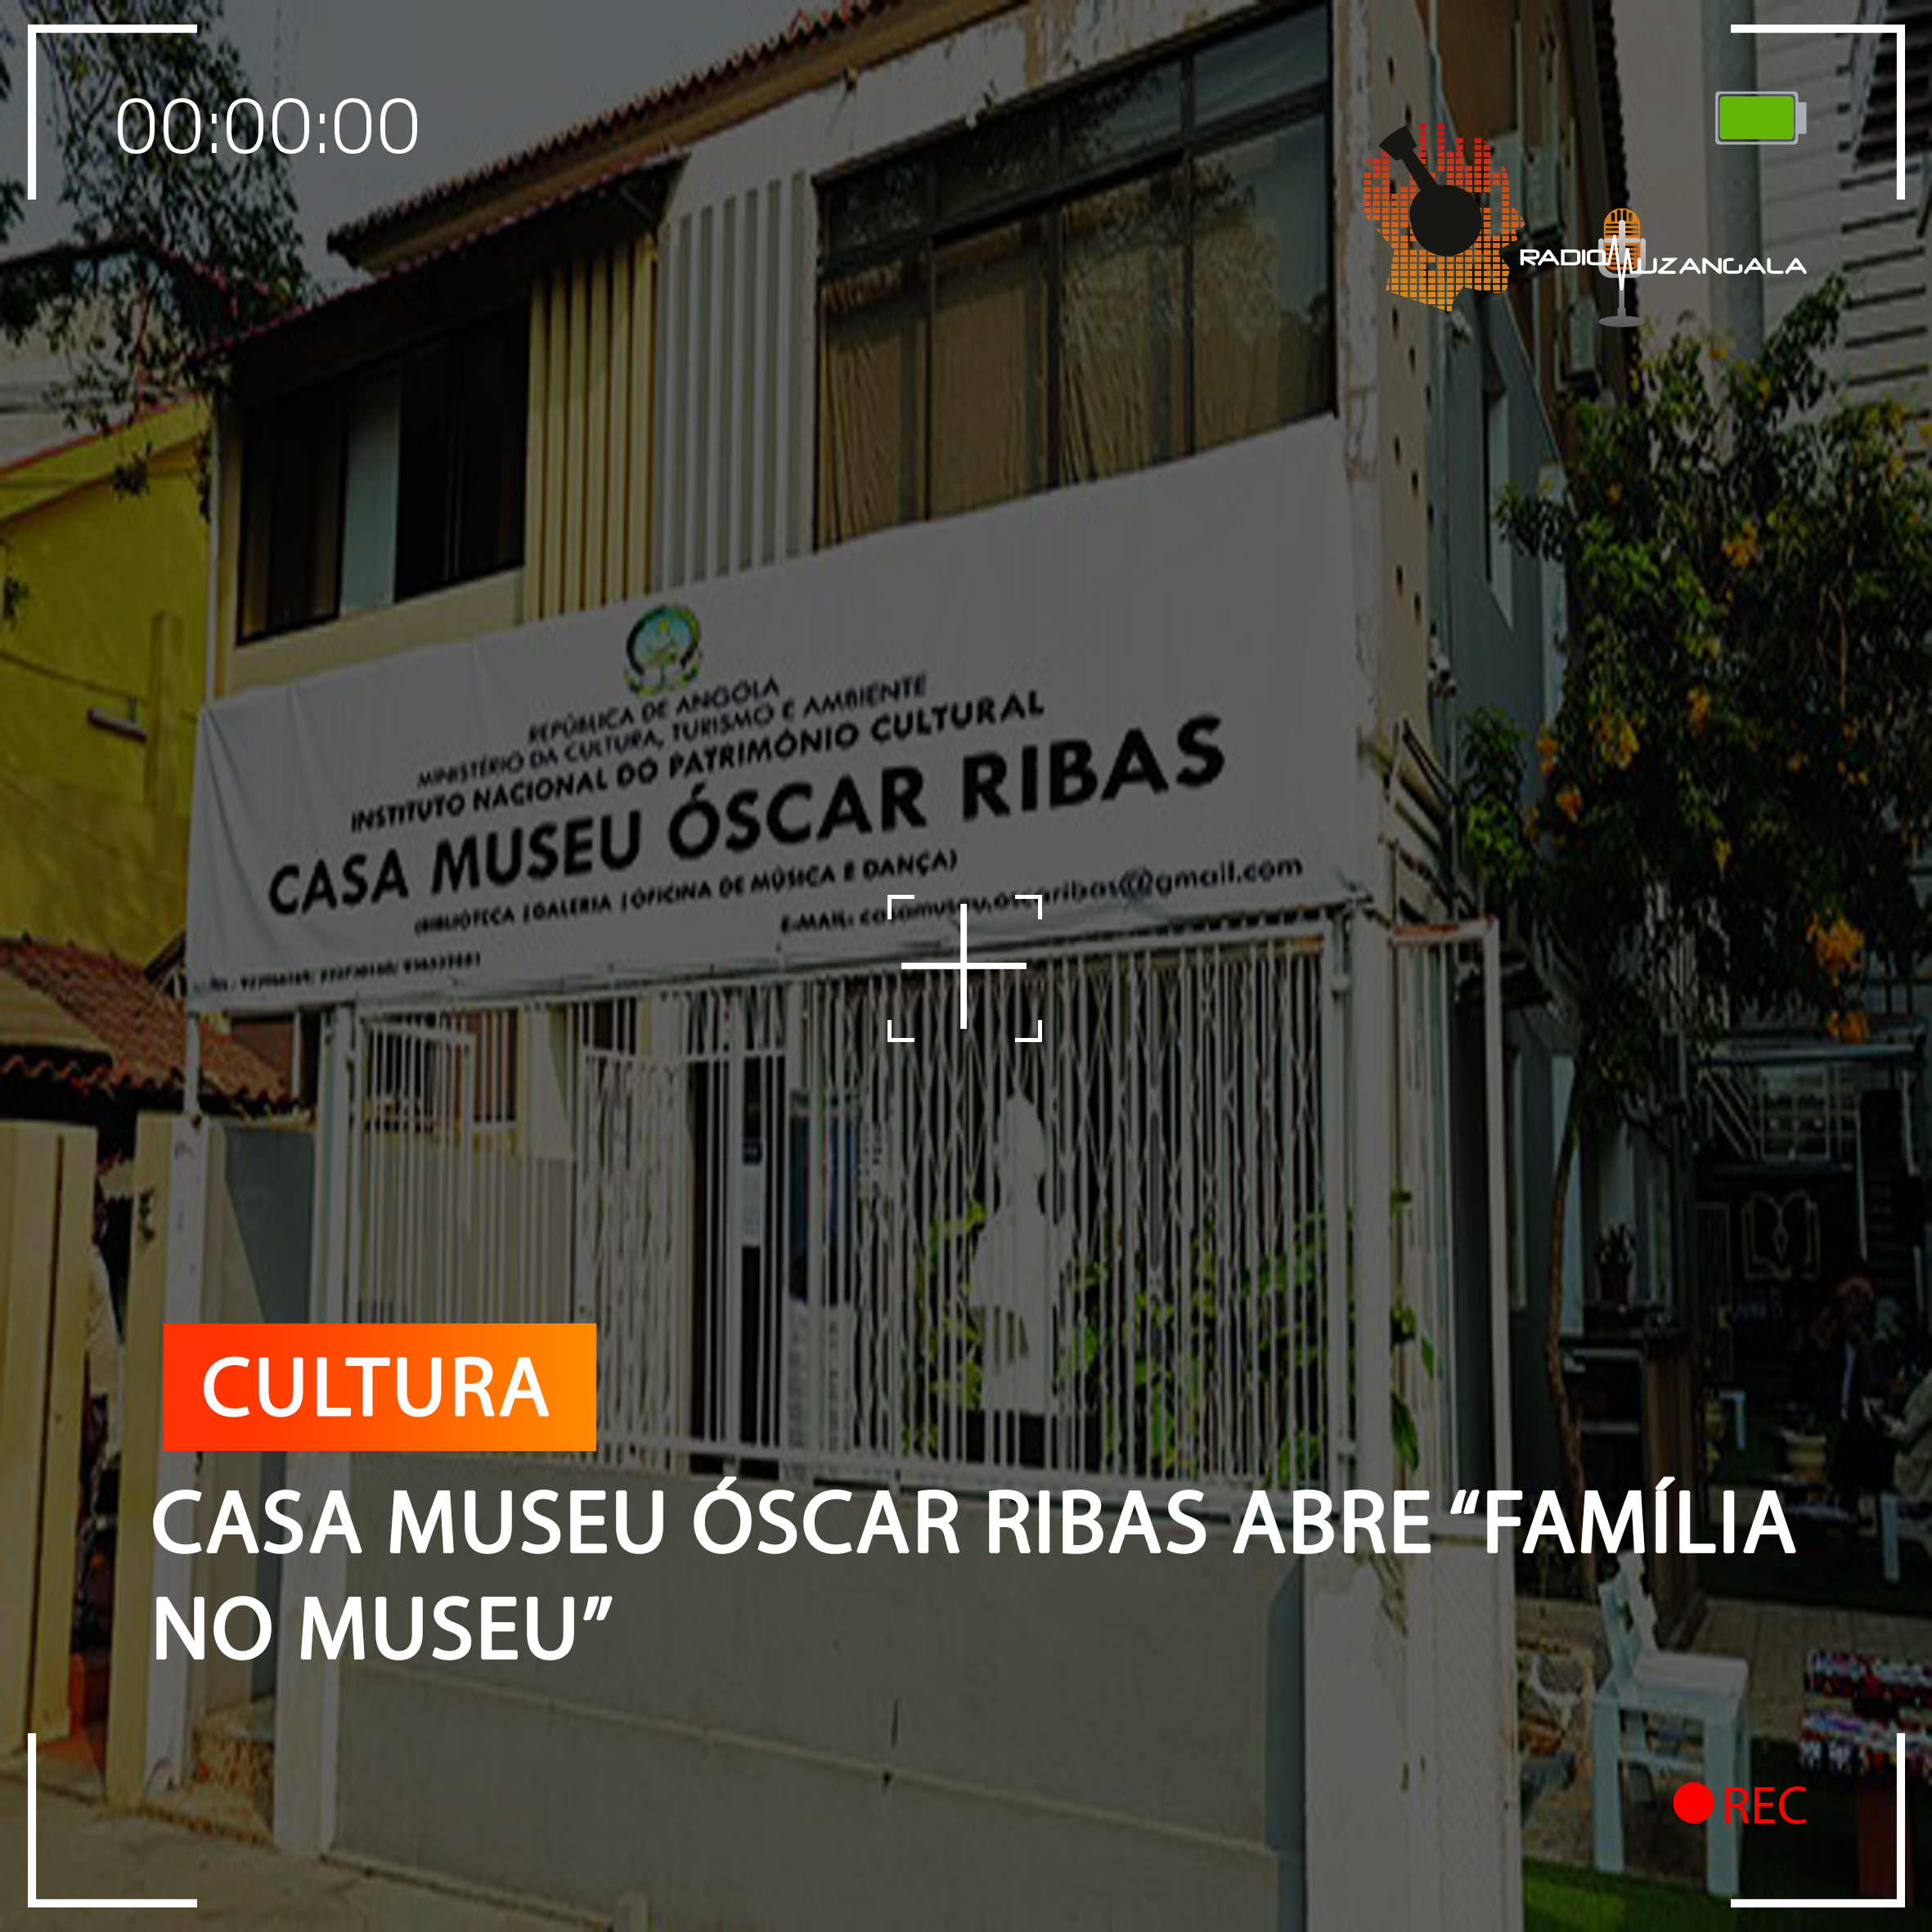  CASA MUSEU ÓSCAR RIBAS ABRE “FAMÍLIA NO MUSEU”